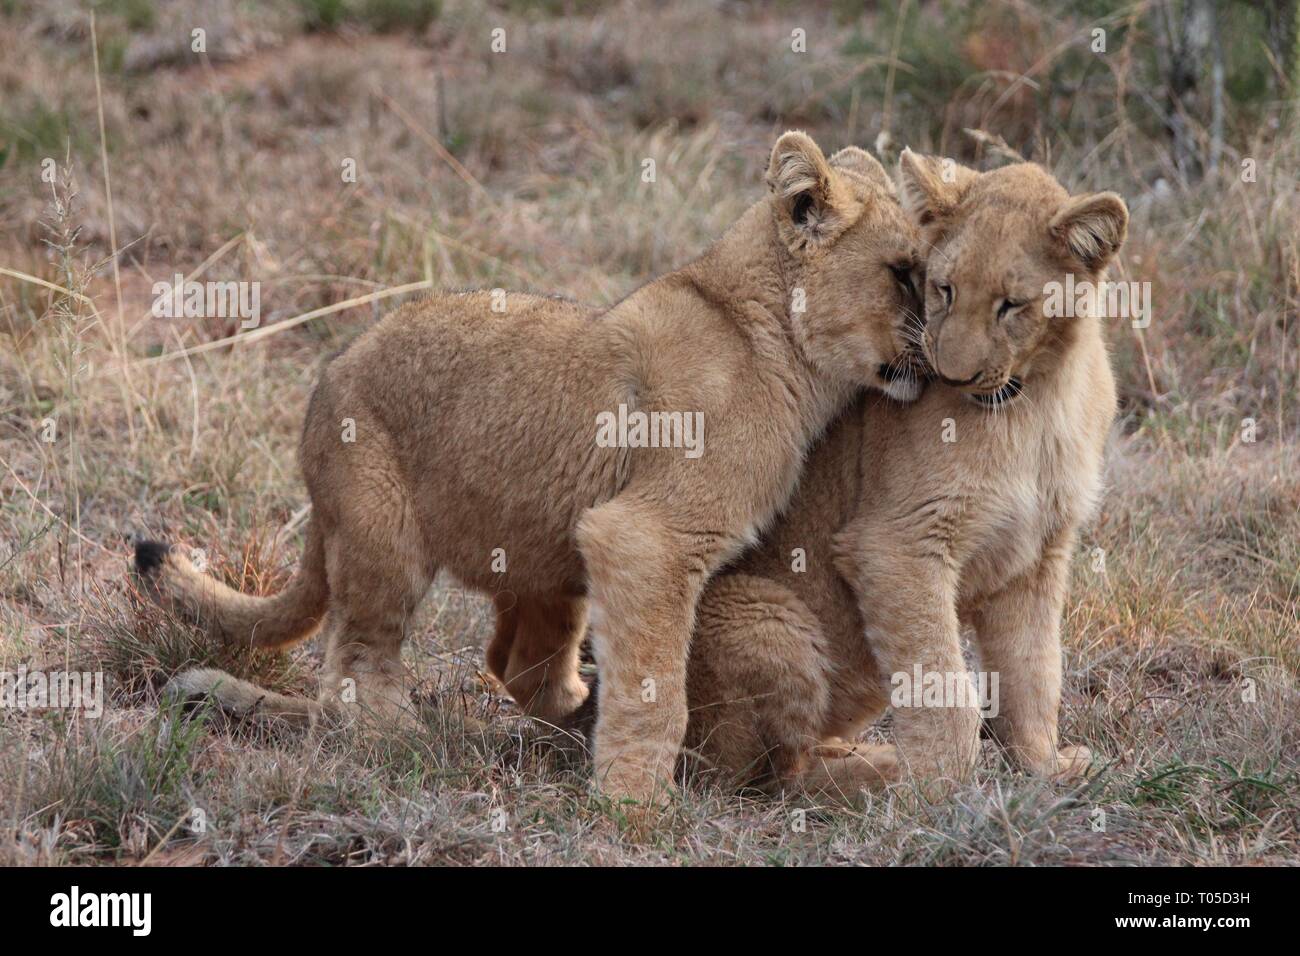 Nala Lion King High Resolution Stock Photography And Images Alamy